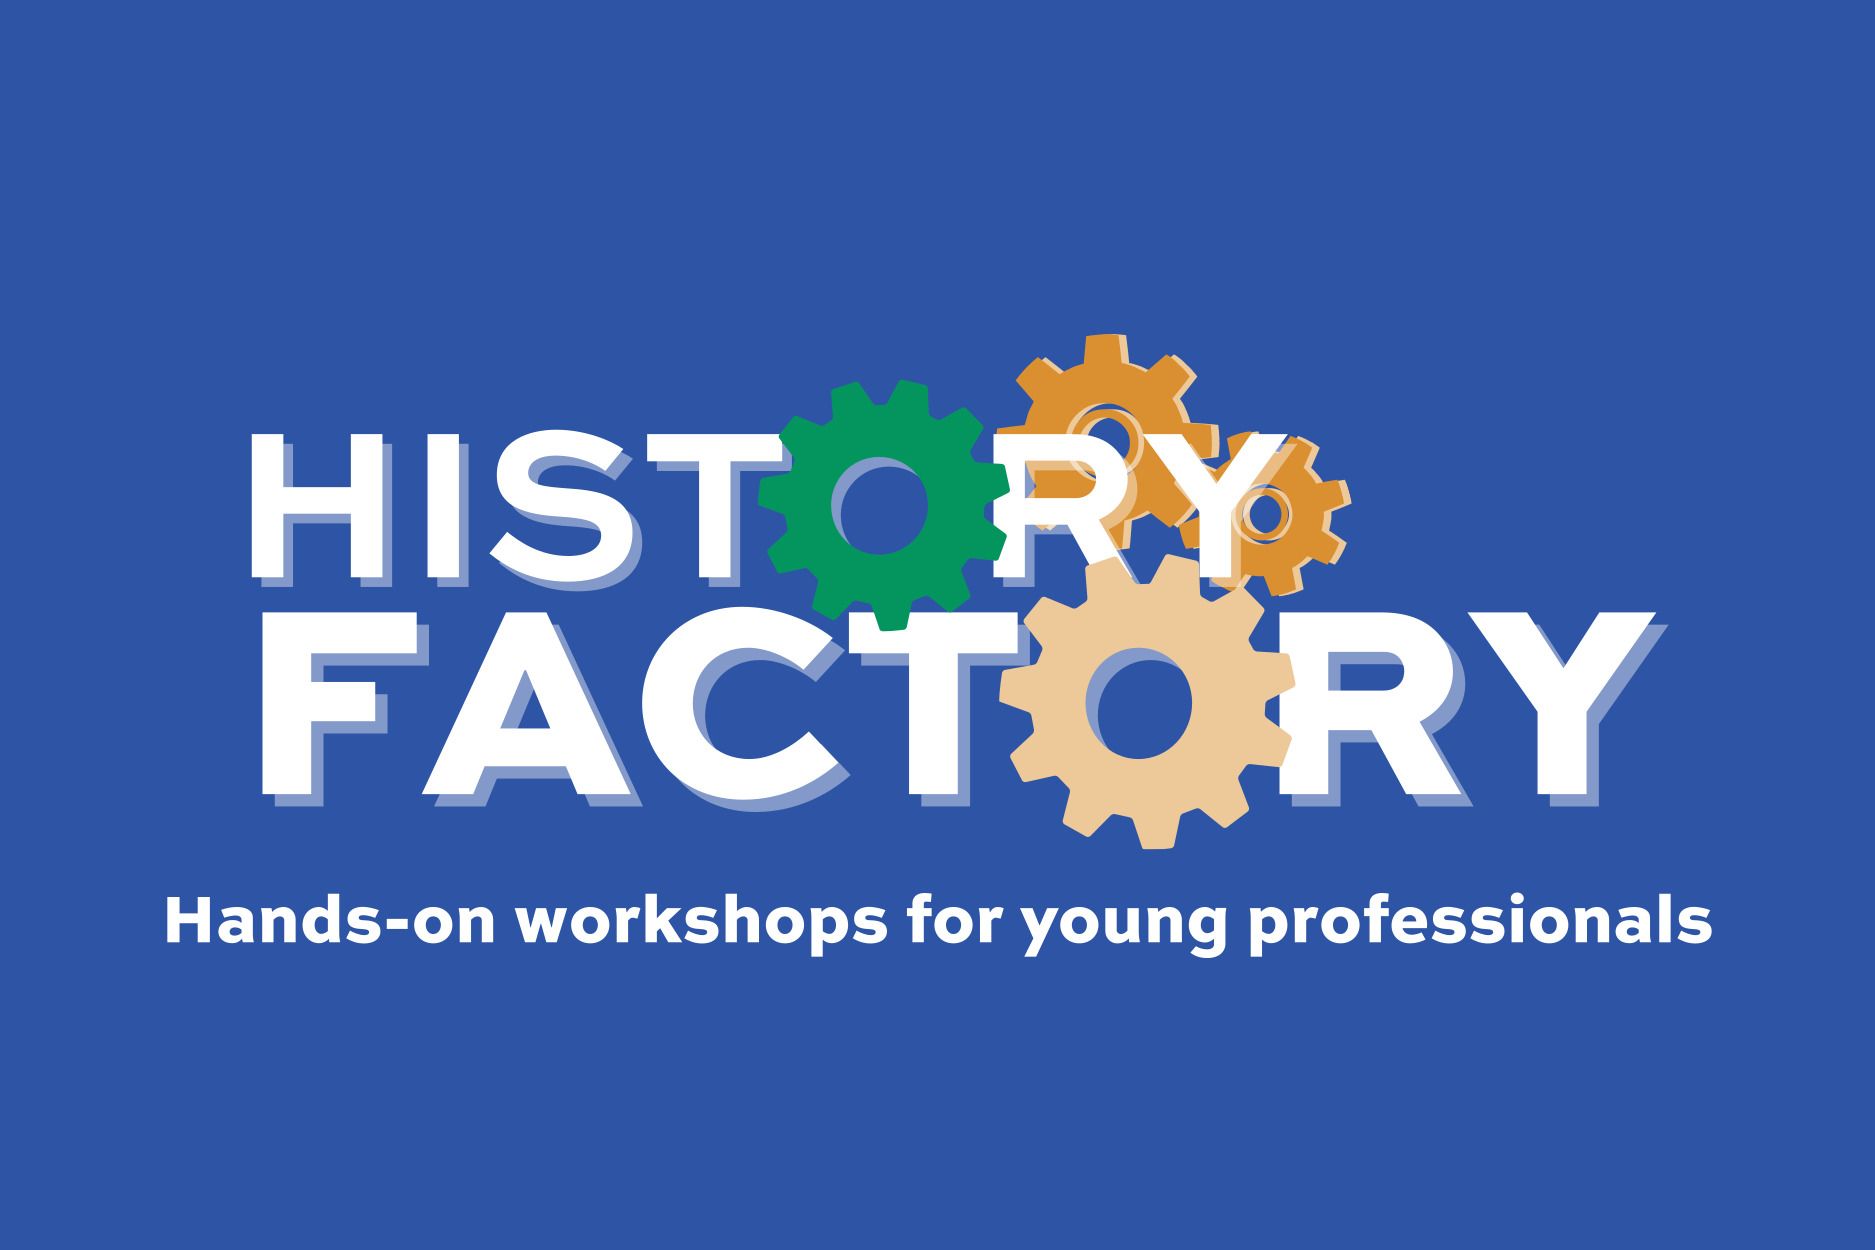 History Factory